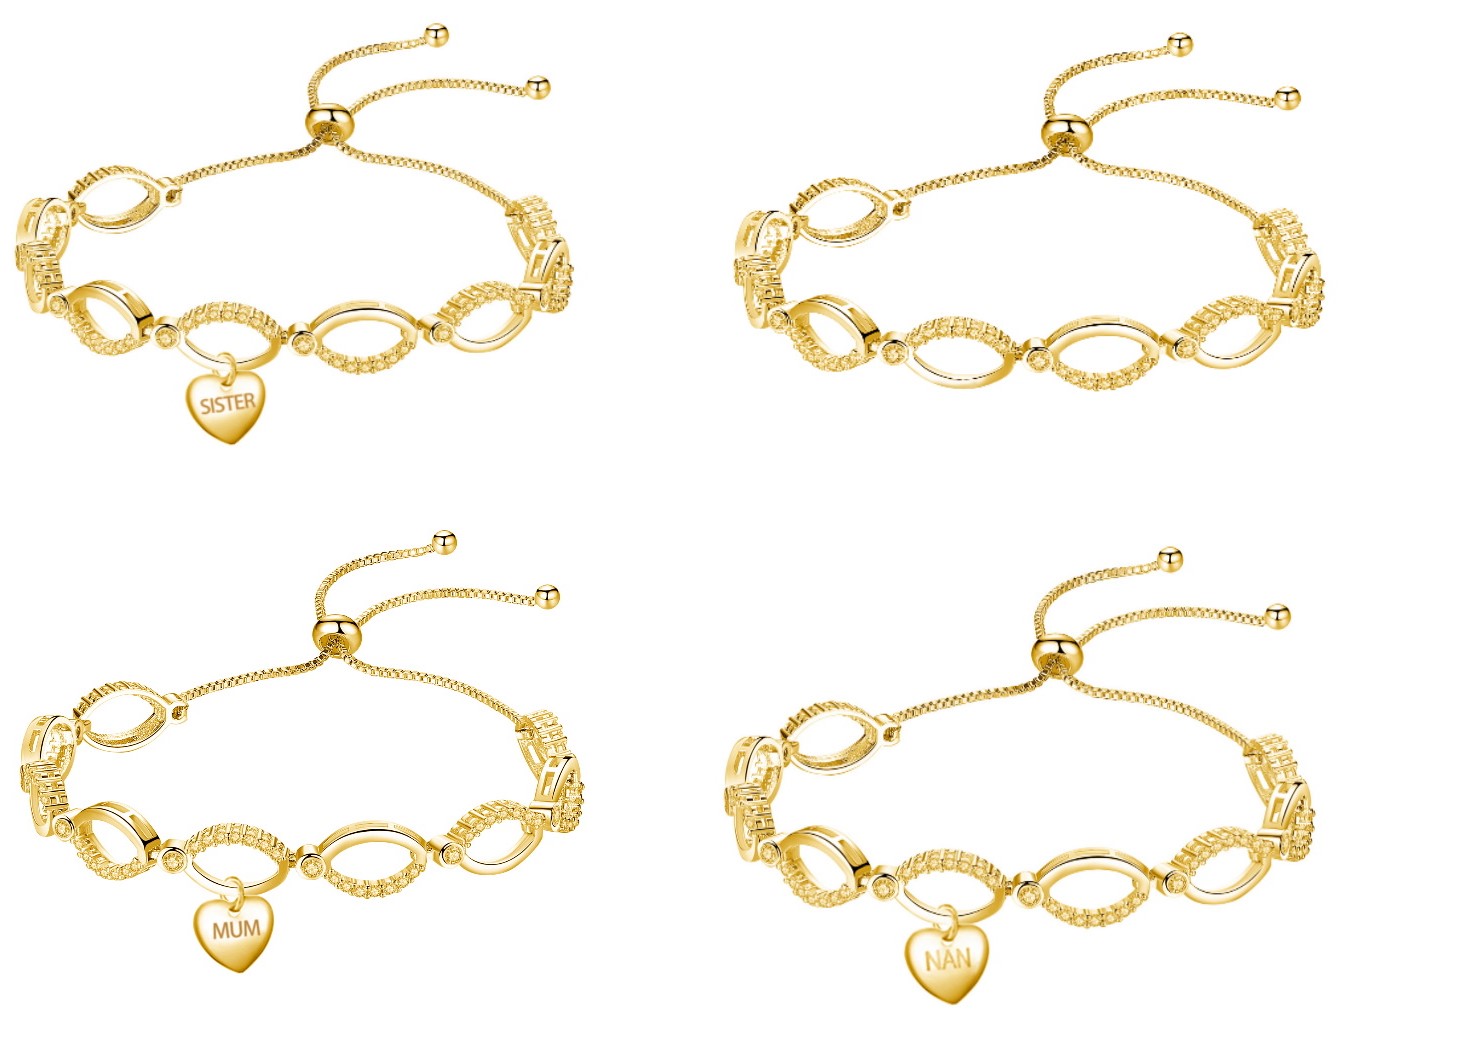 20pc_Gold Adjustable Infinity Bracelet Swarovski with Mum Nan Sister or plain_UK Seller_GSVB061-Gold adjustable variable